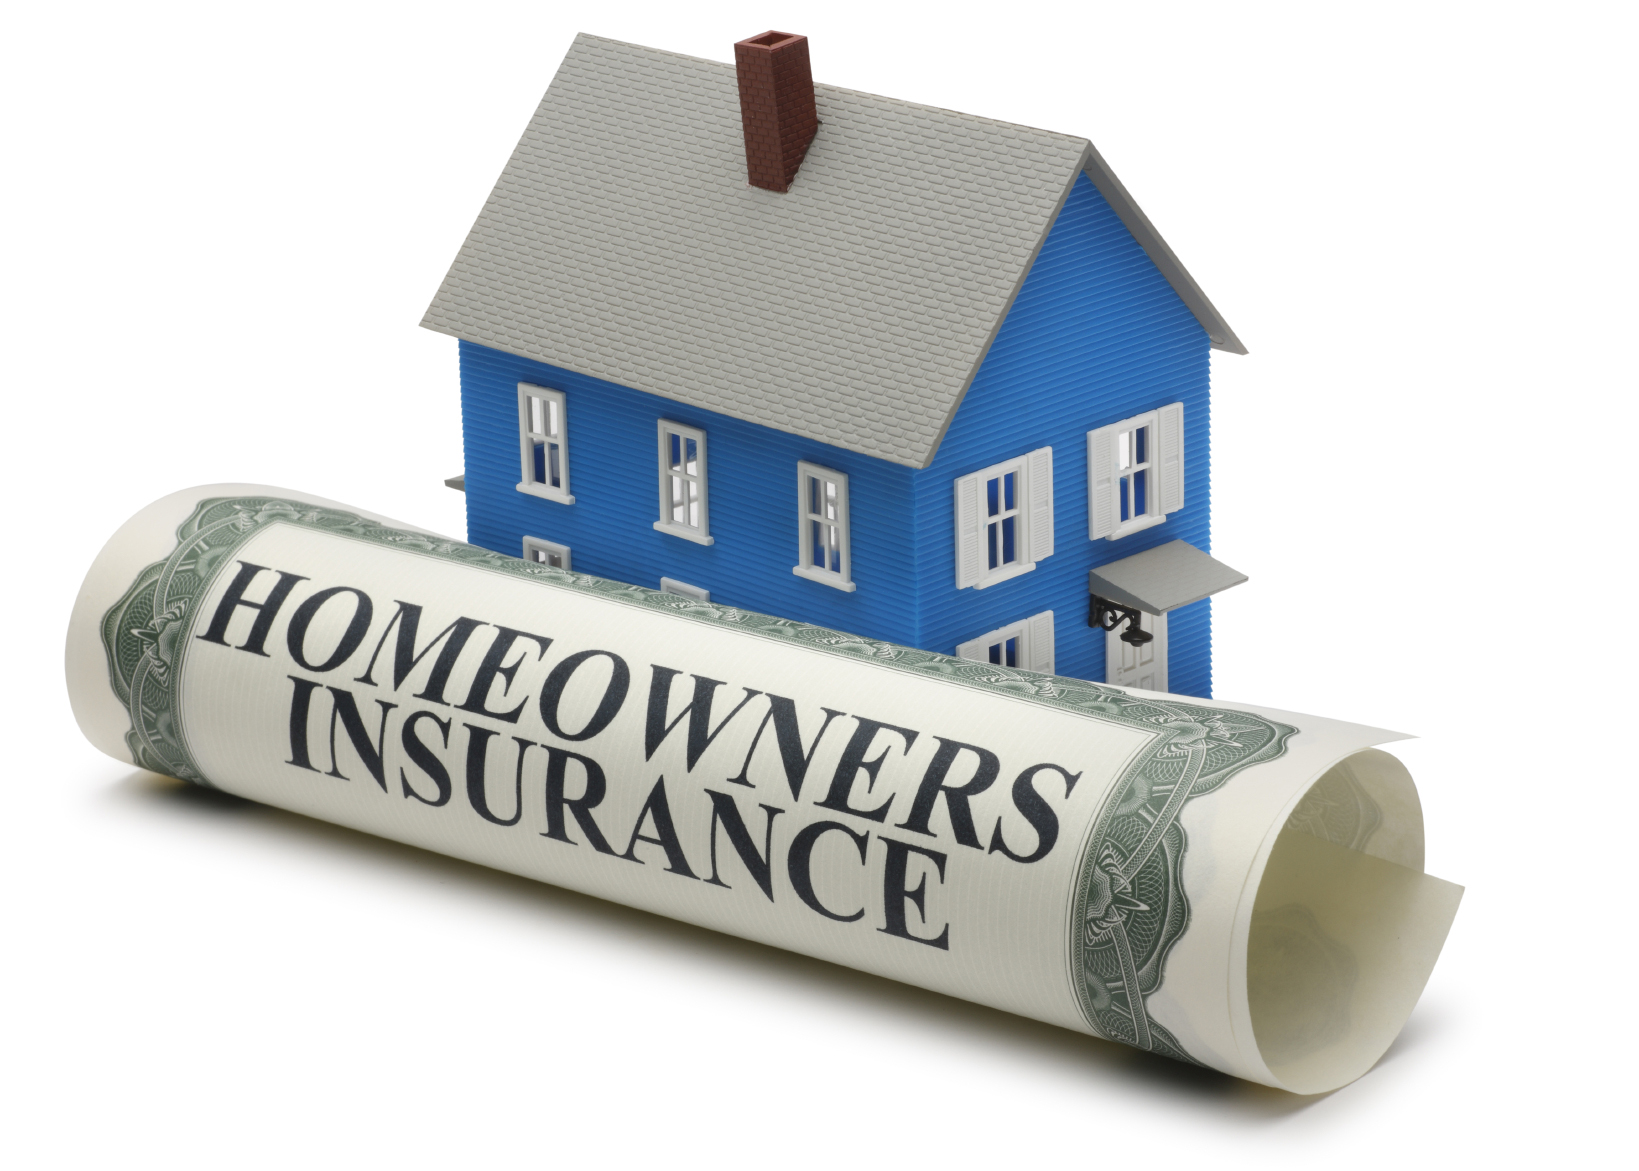 Homeowners Insurance - Bankrate.com